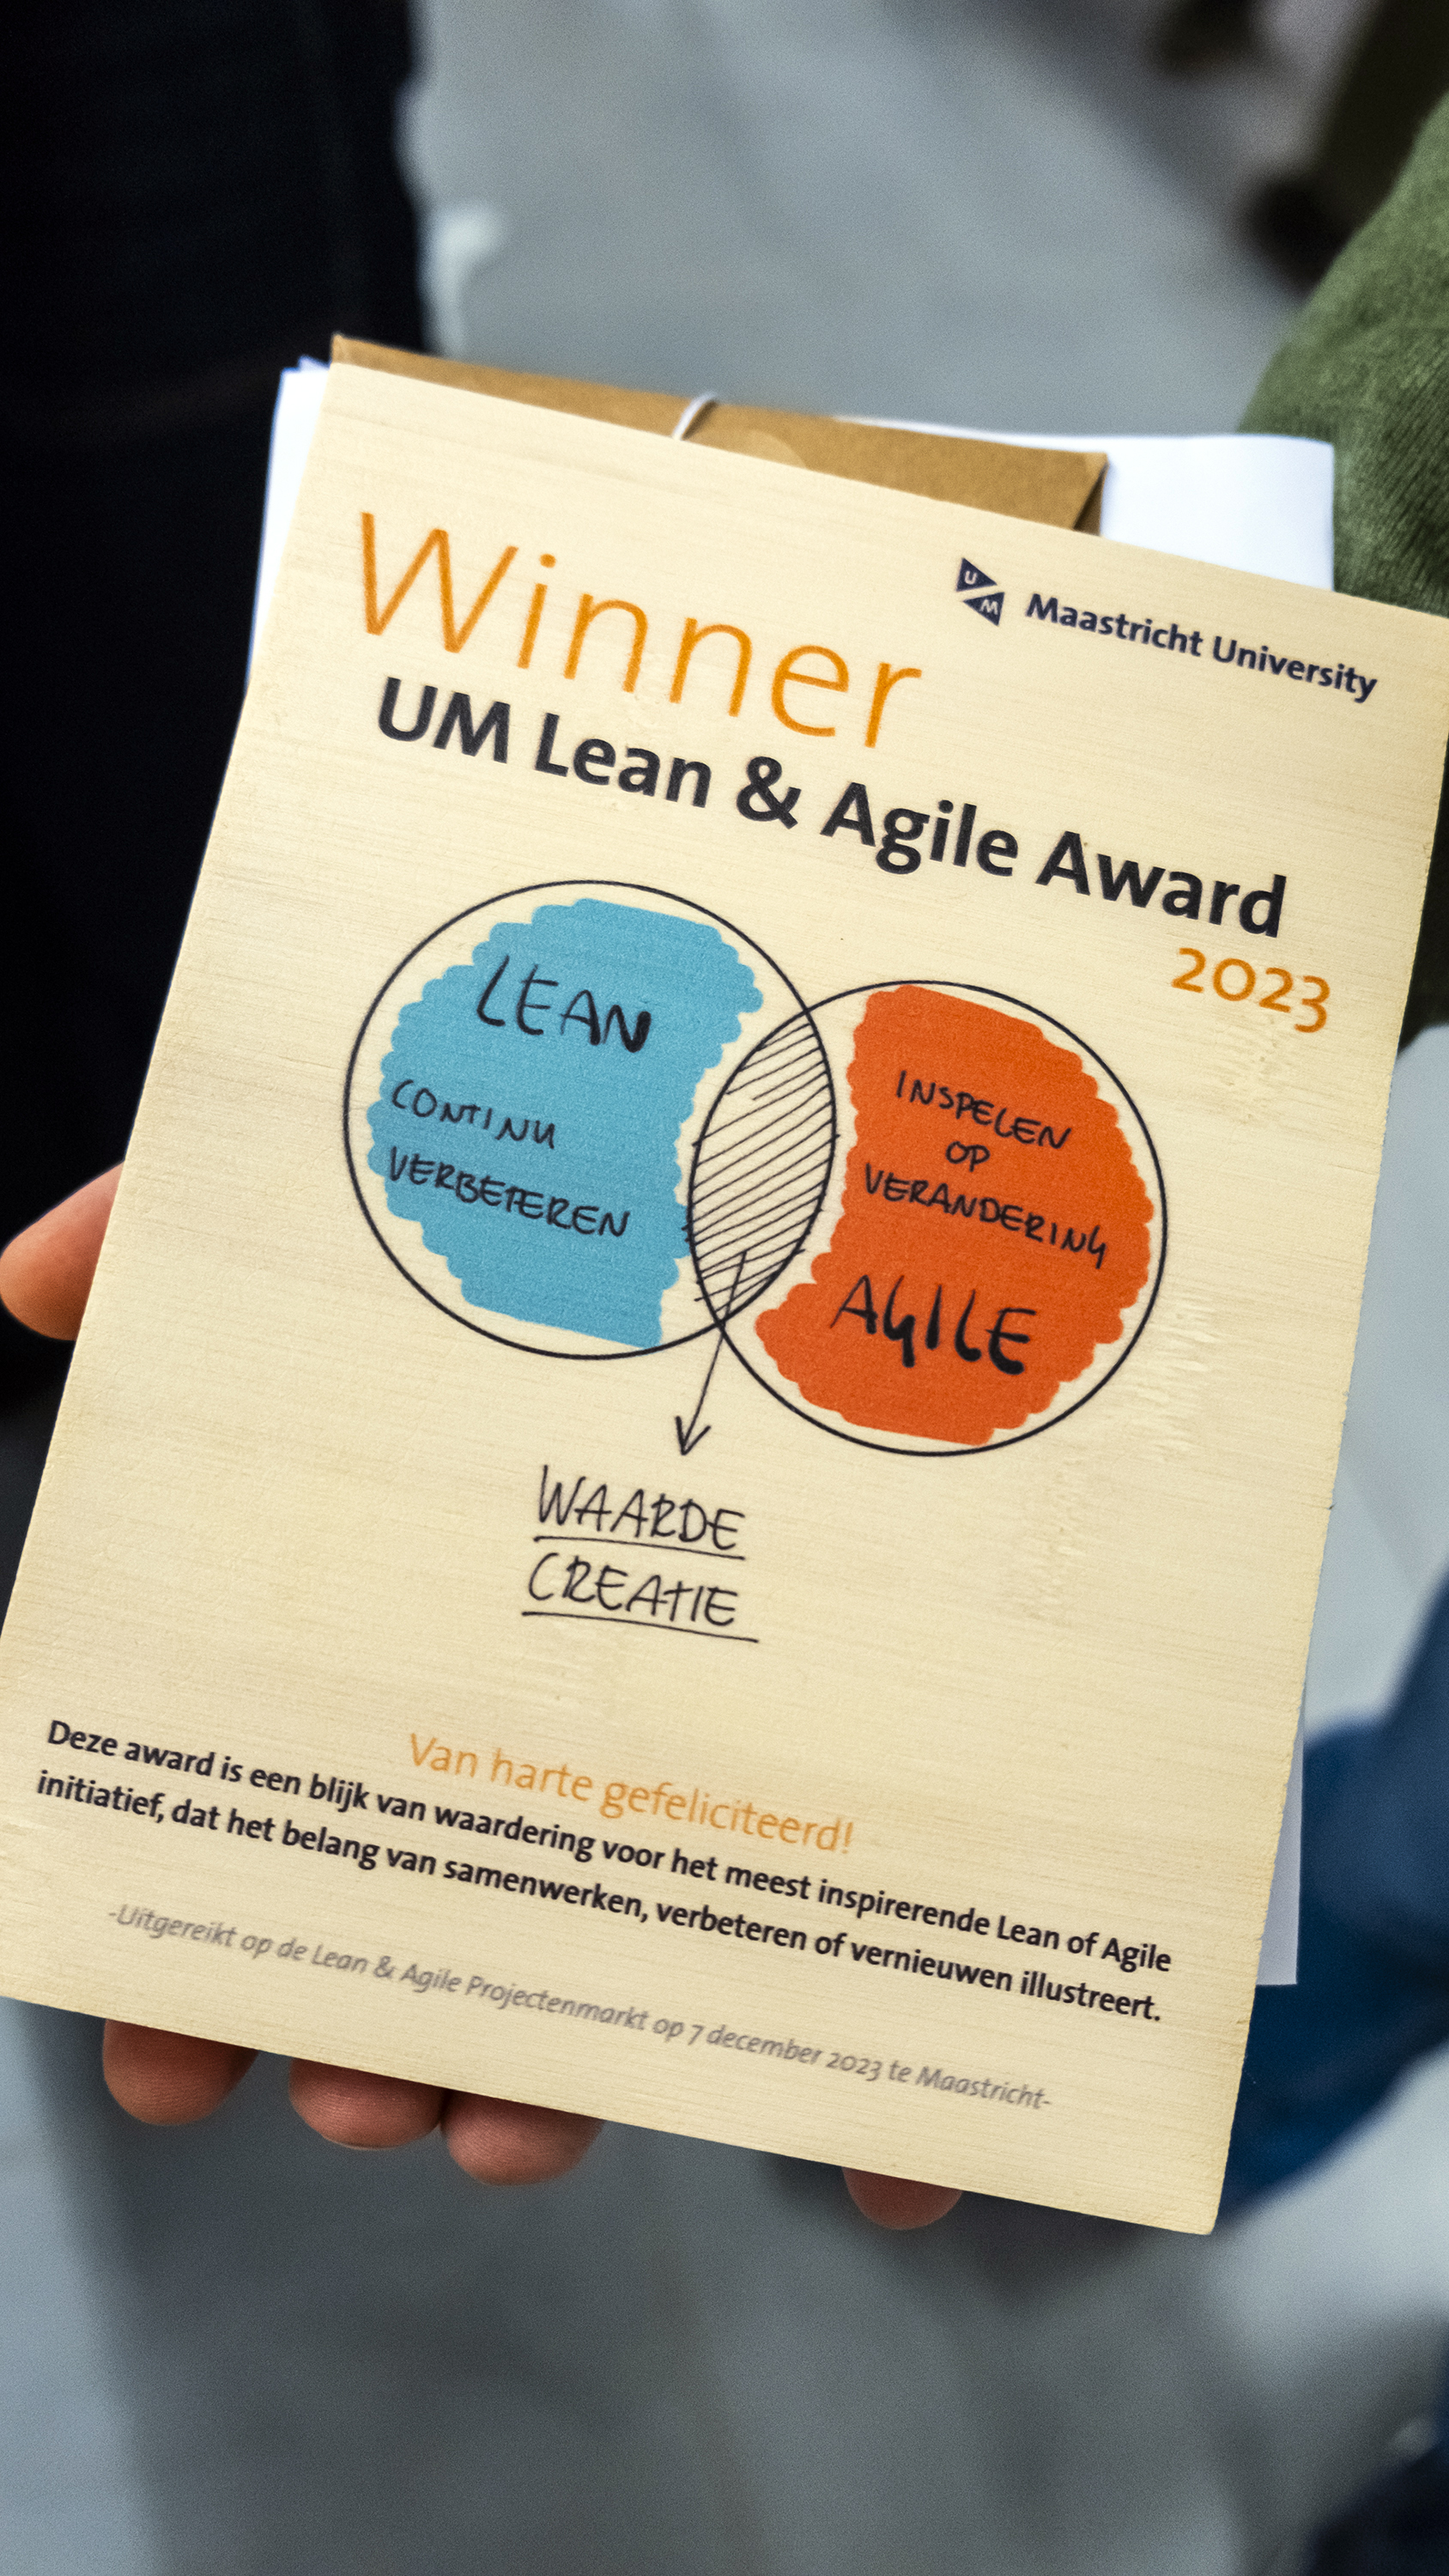 AppChallenge@UM 2023 wins Lean & Agile Award 2023